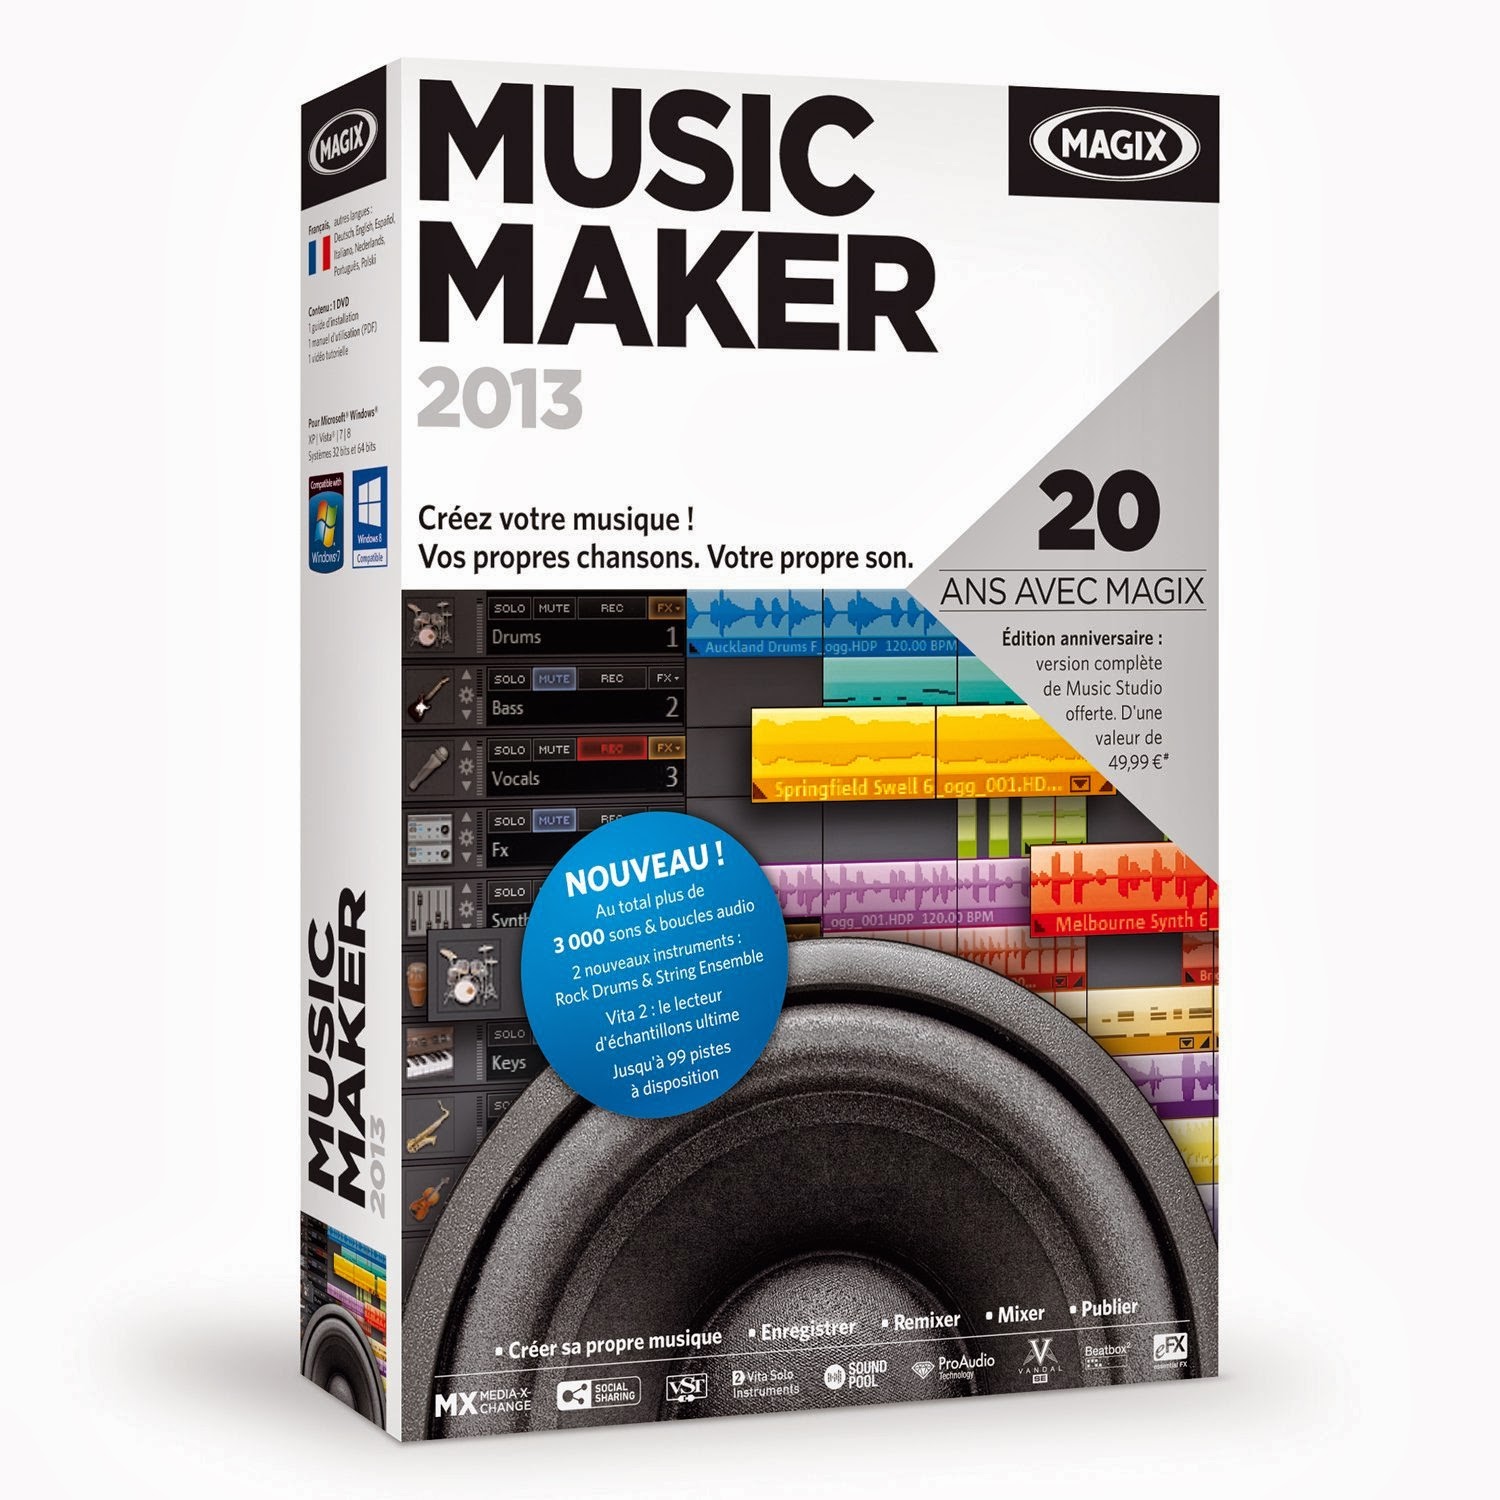 magix music maker serial key 2013